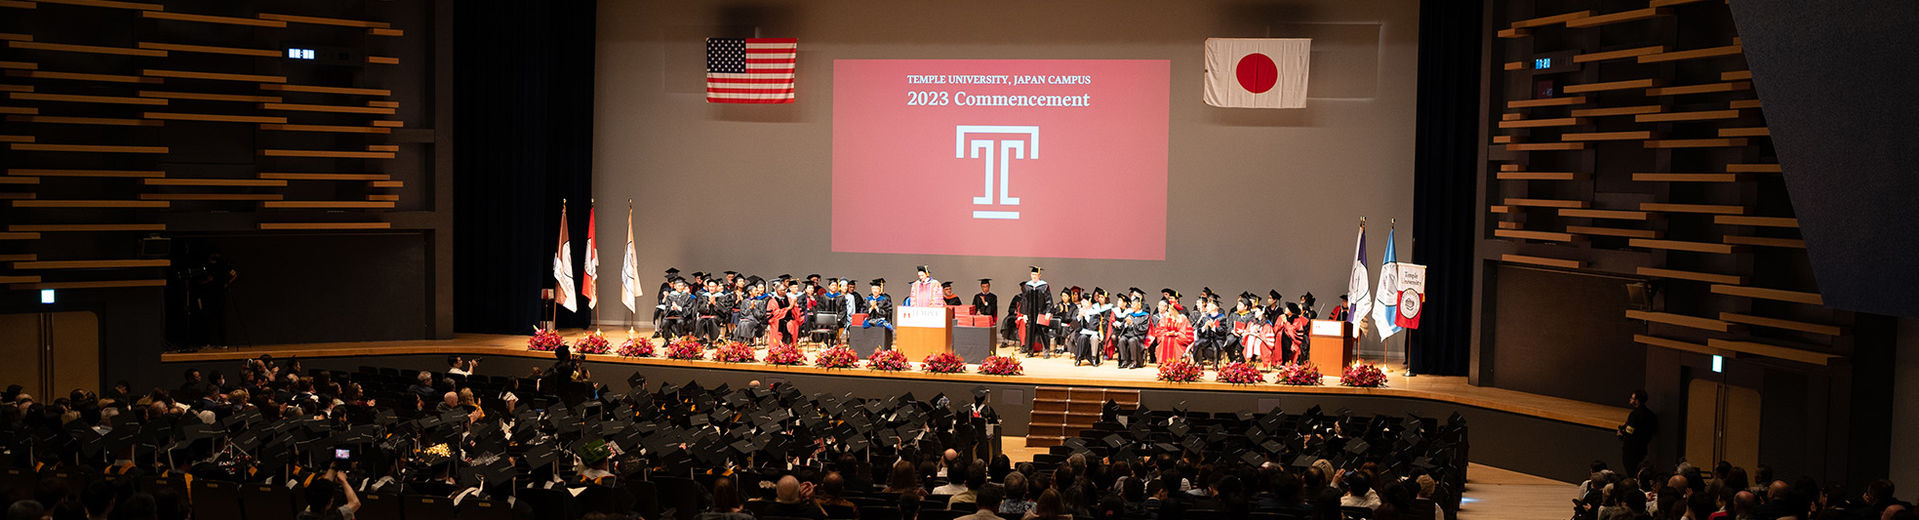 Commencement at Temple University, Japan Campus